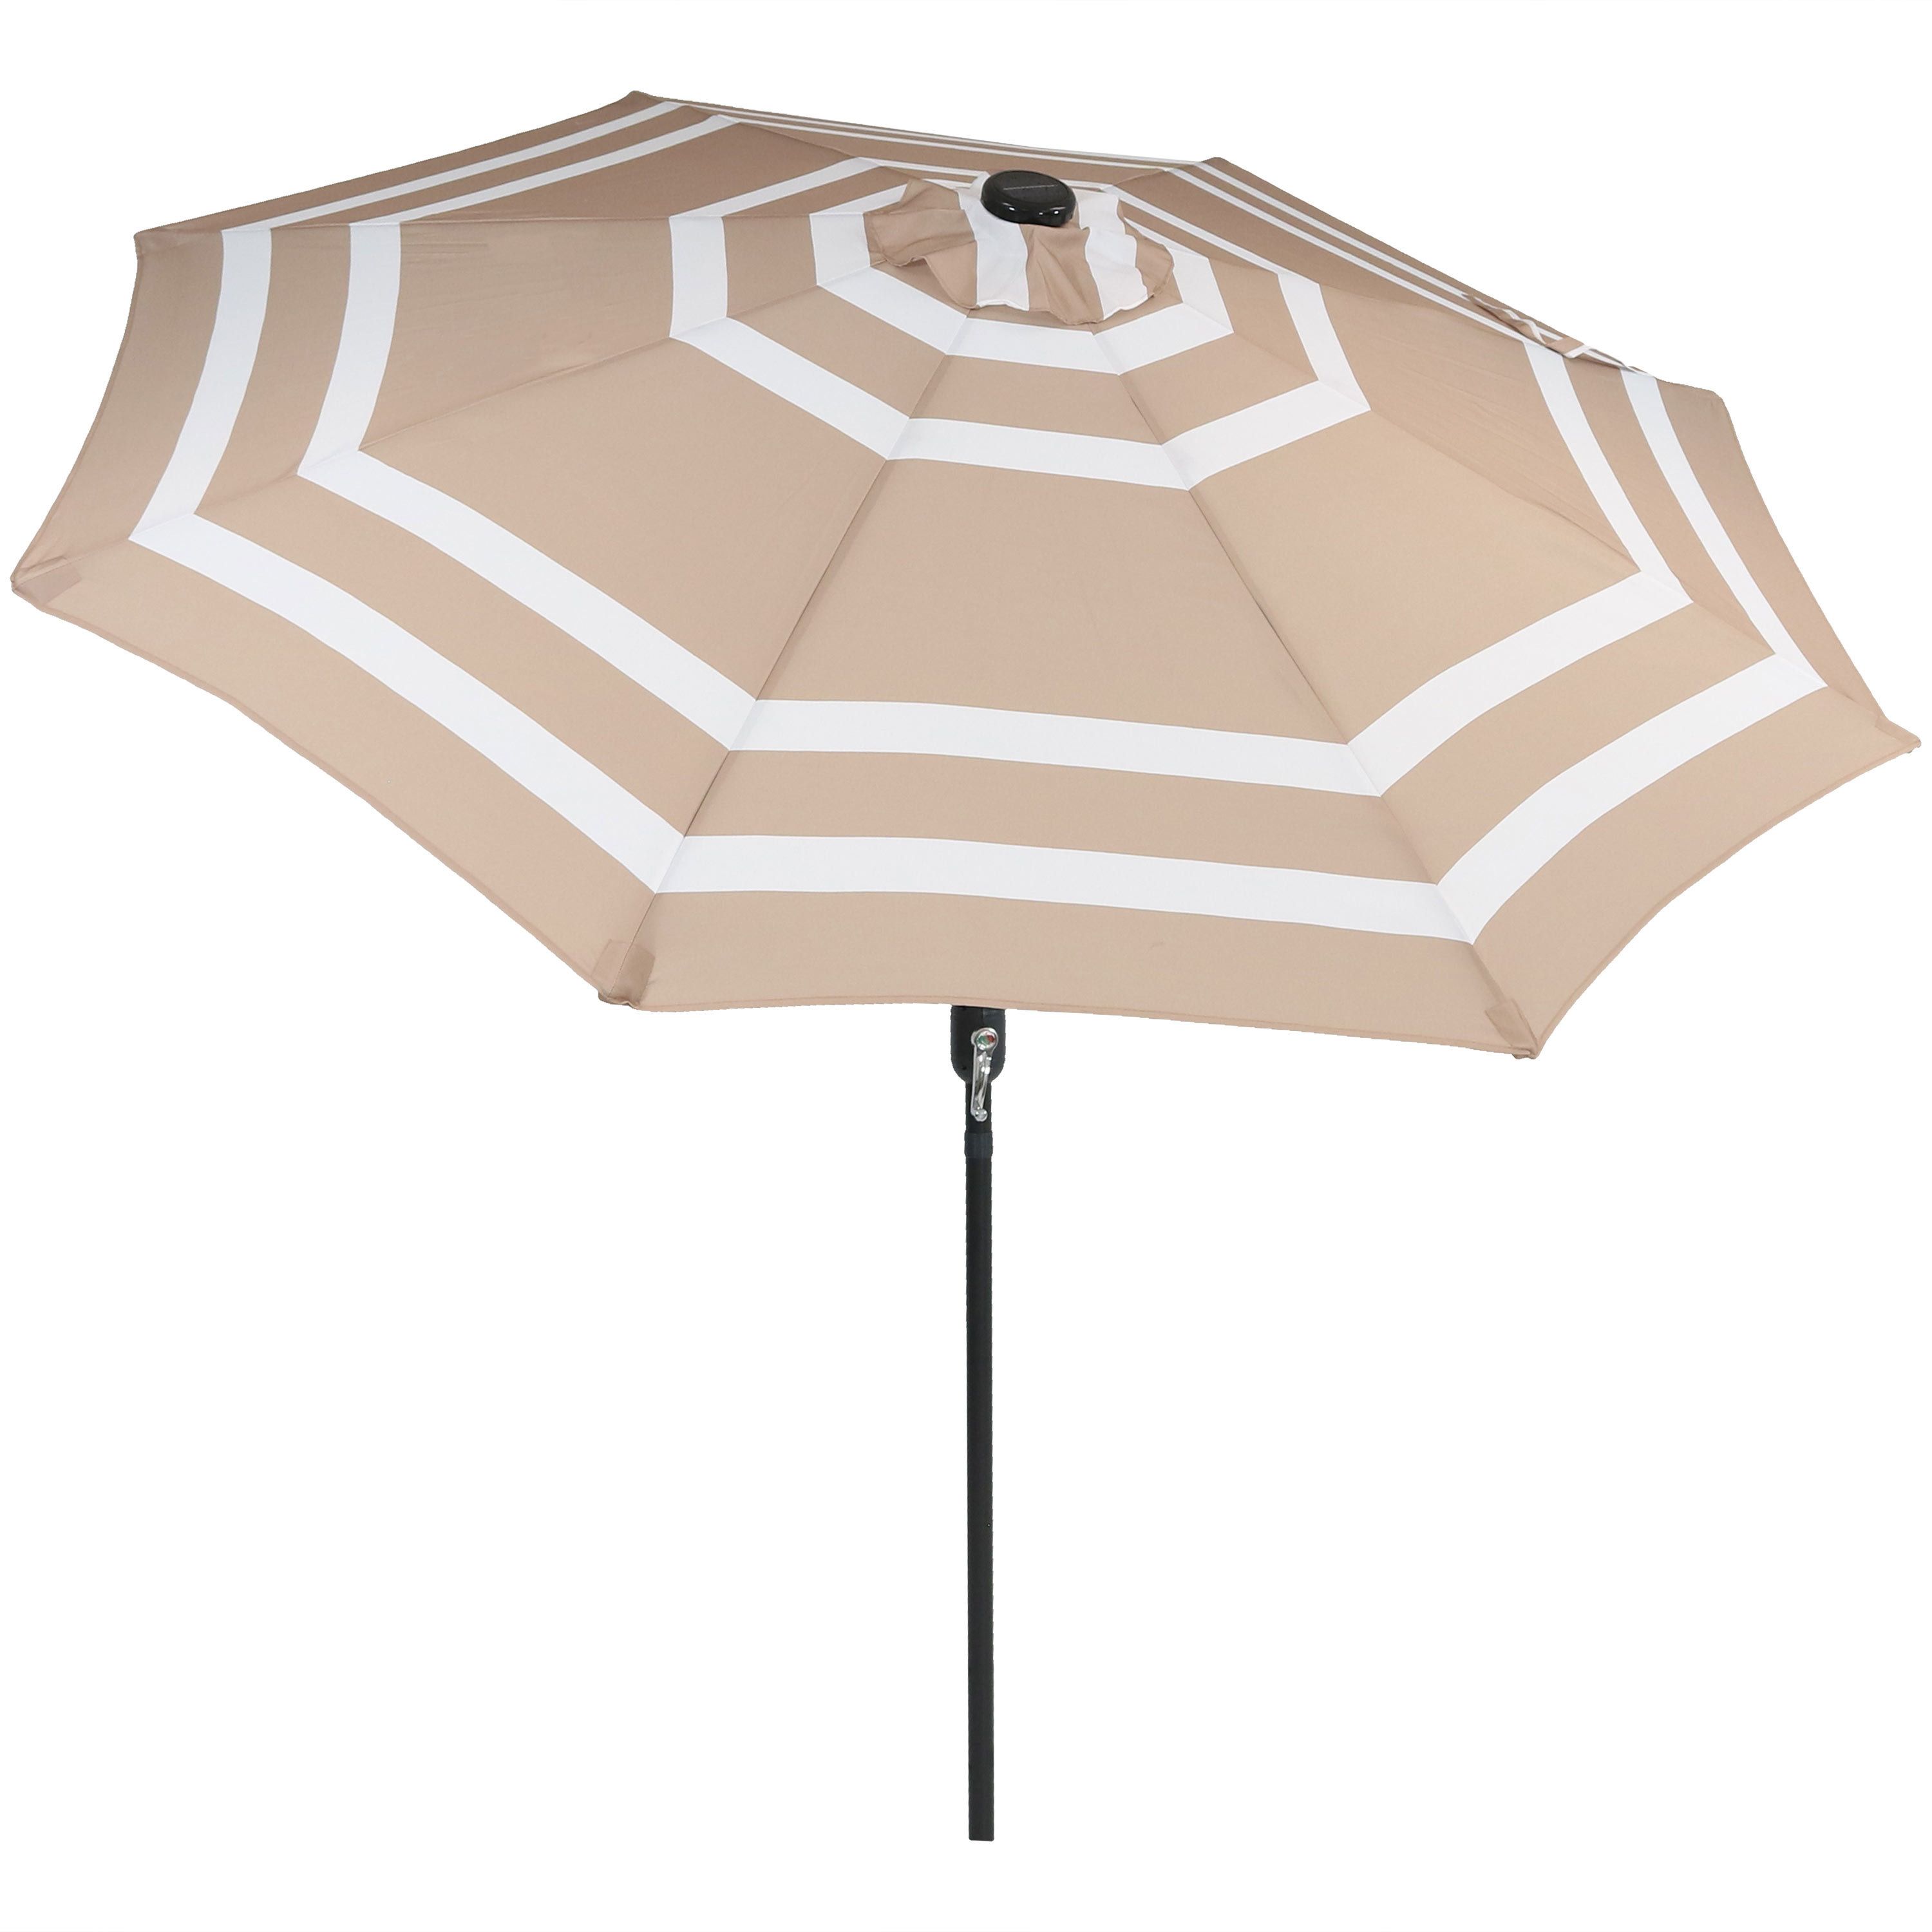 Annabelle Market Umbrellas Intended For Most Popular Docia 9' Market Umbrella (View 3 of 20)